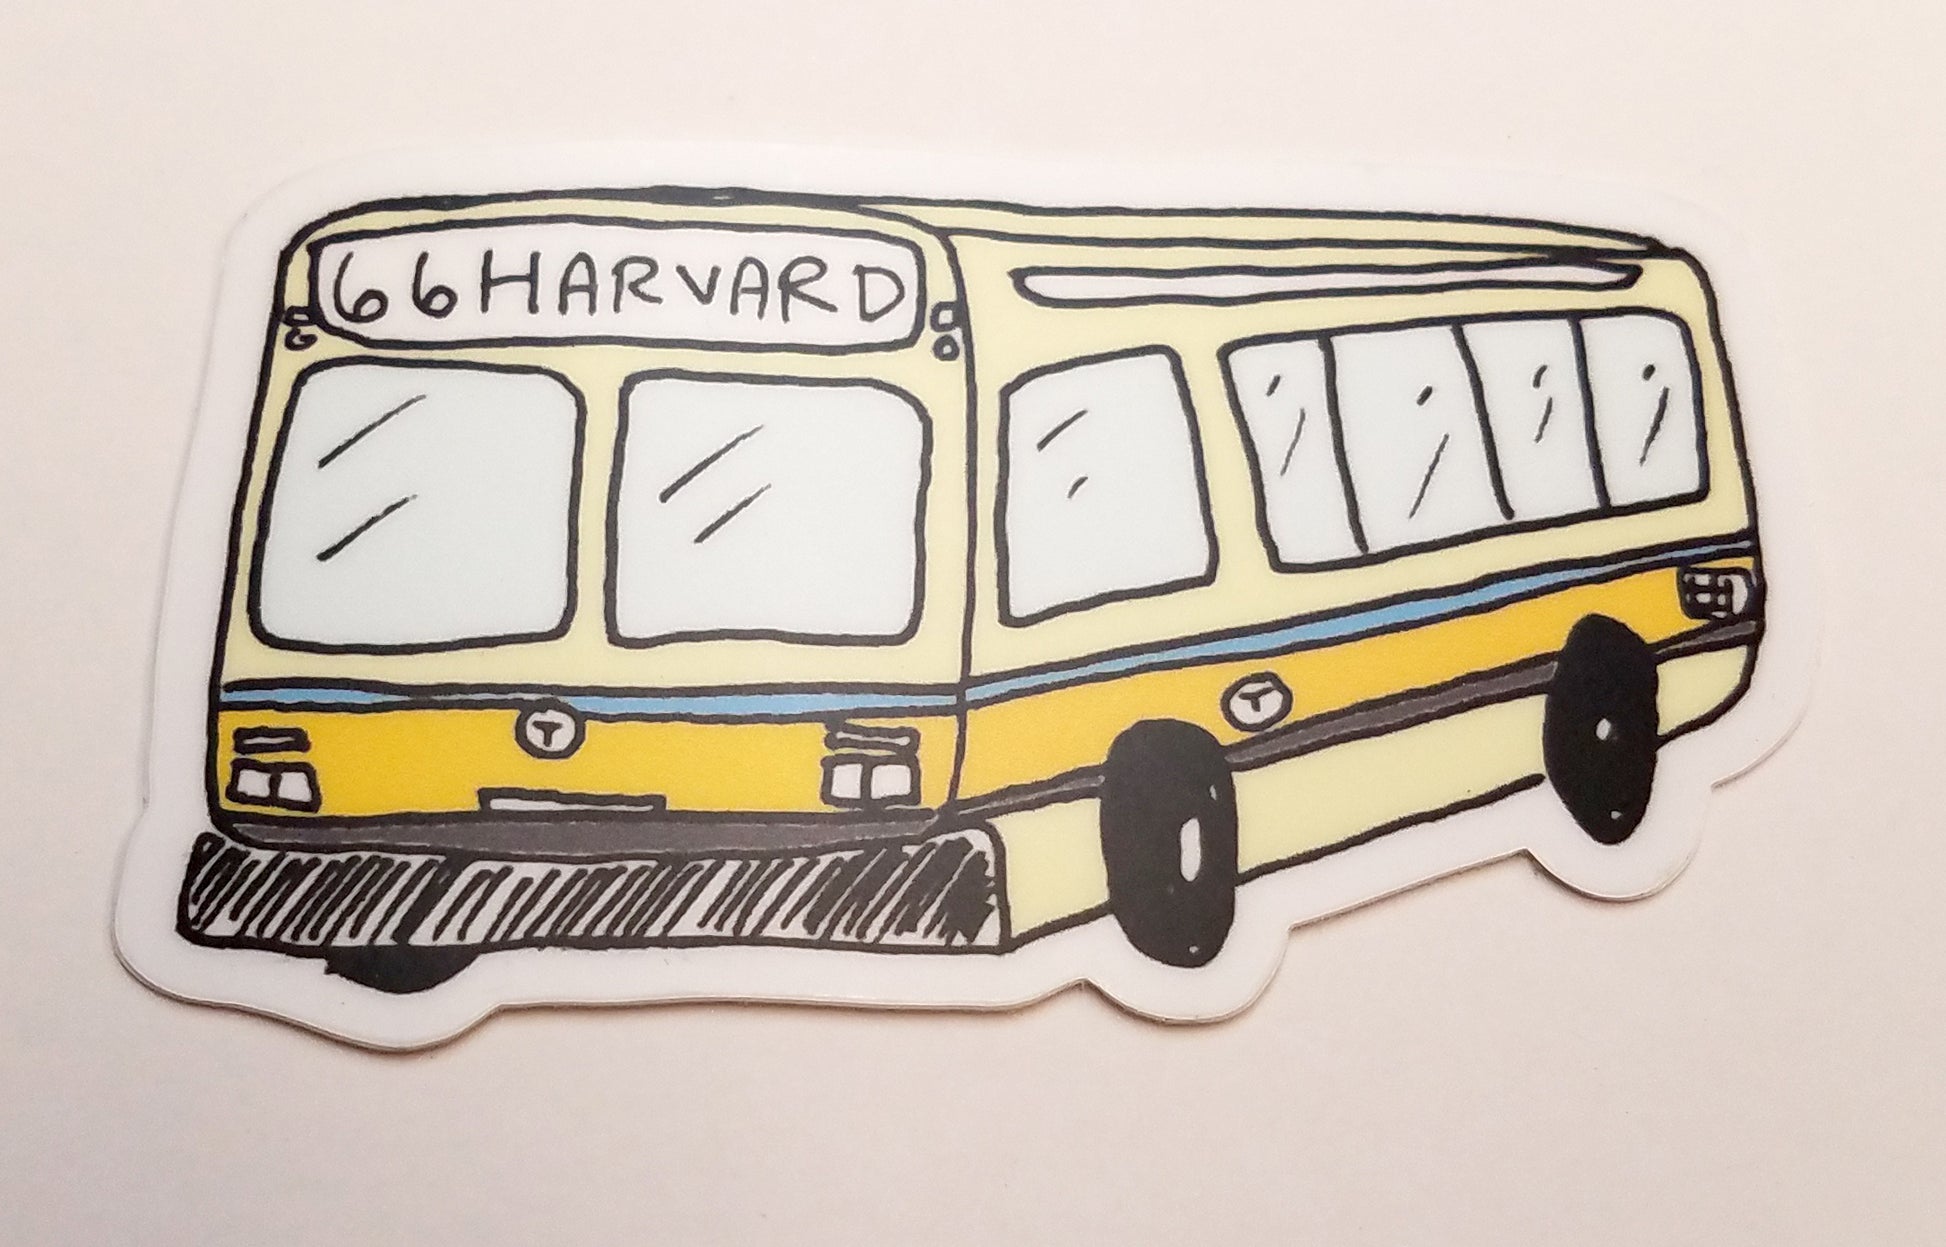 MBTA Bus Sticker: 66 Harvard